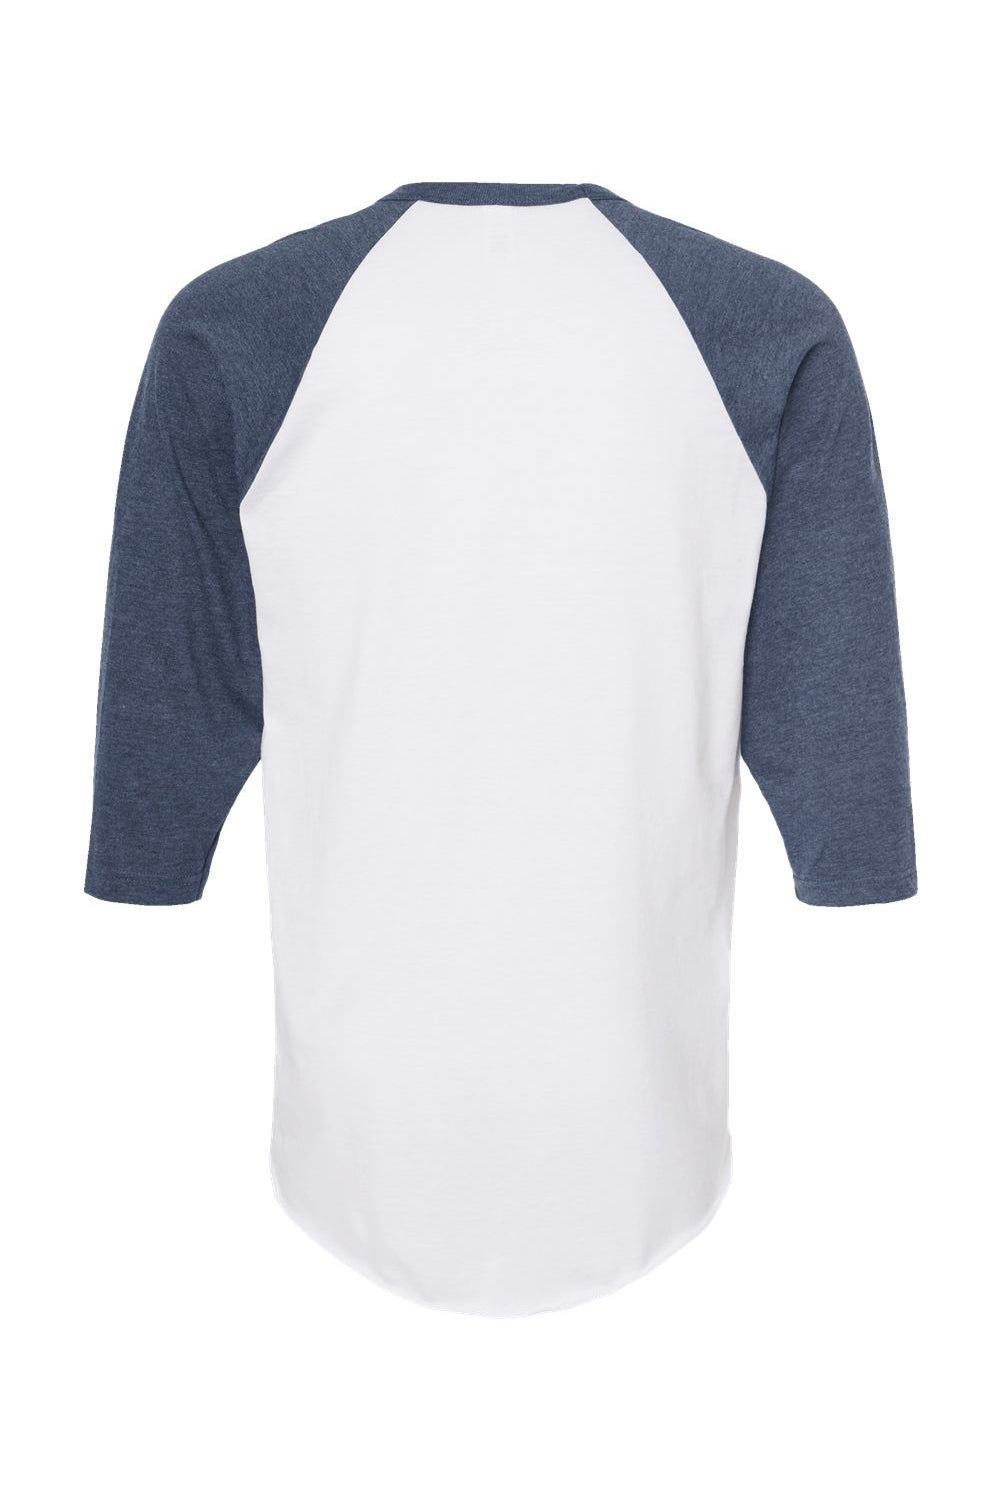 Tultex 245 Mens Fine Jersey Raglan 3/4 Sleeve Crewneck T-Shirt White/Heather Denim Blue Flat Back